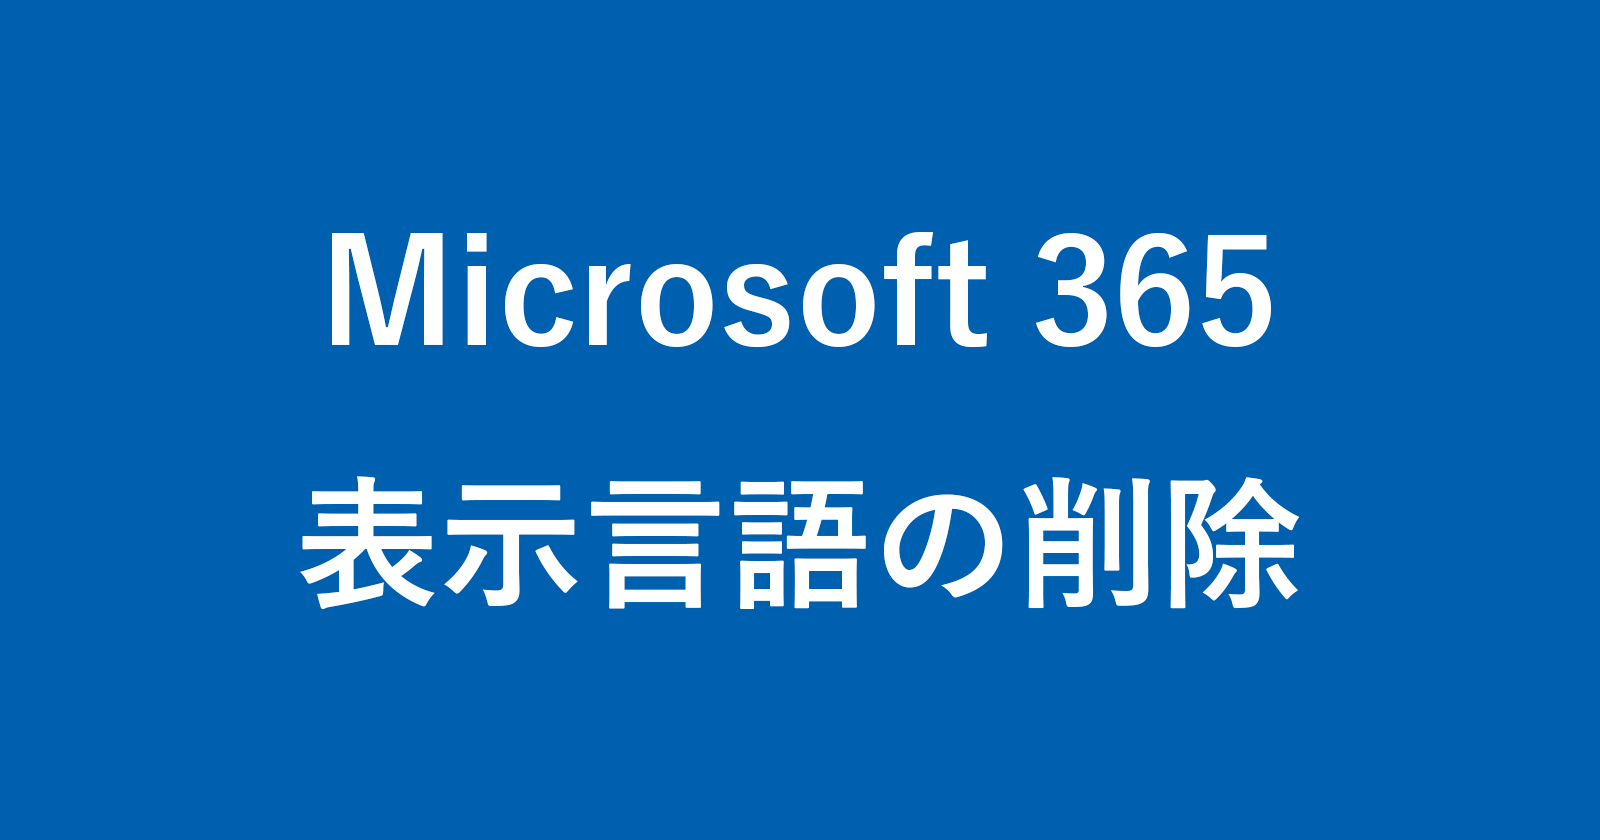 microsoft 365 office display language